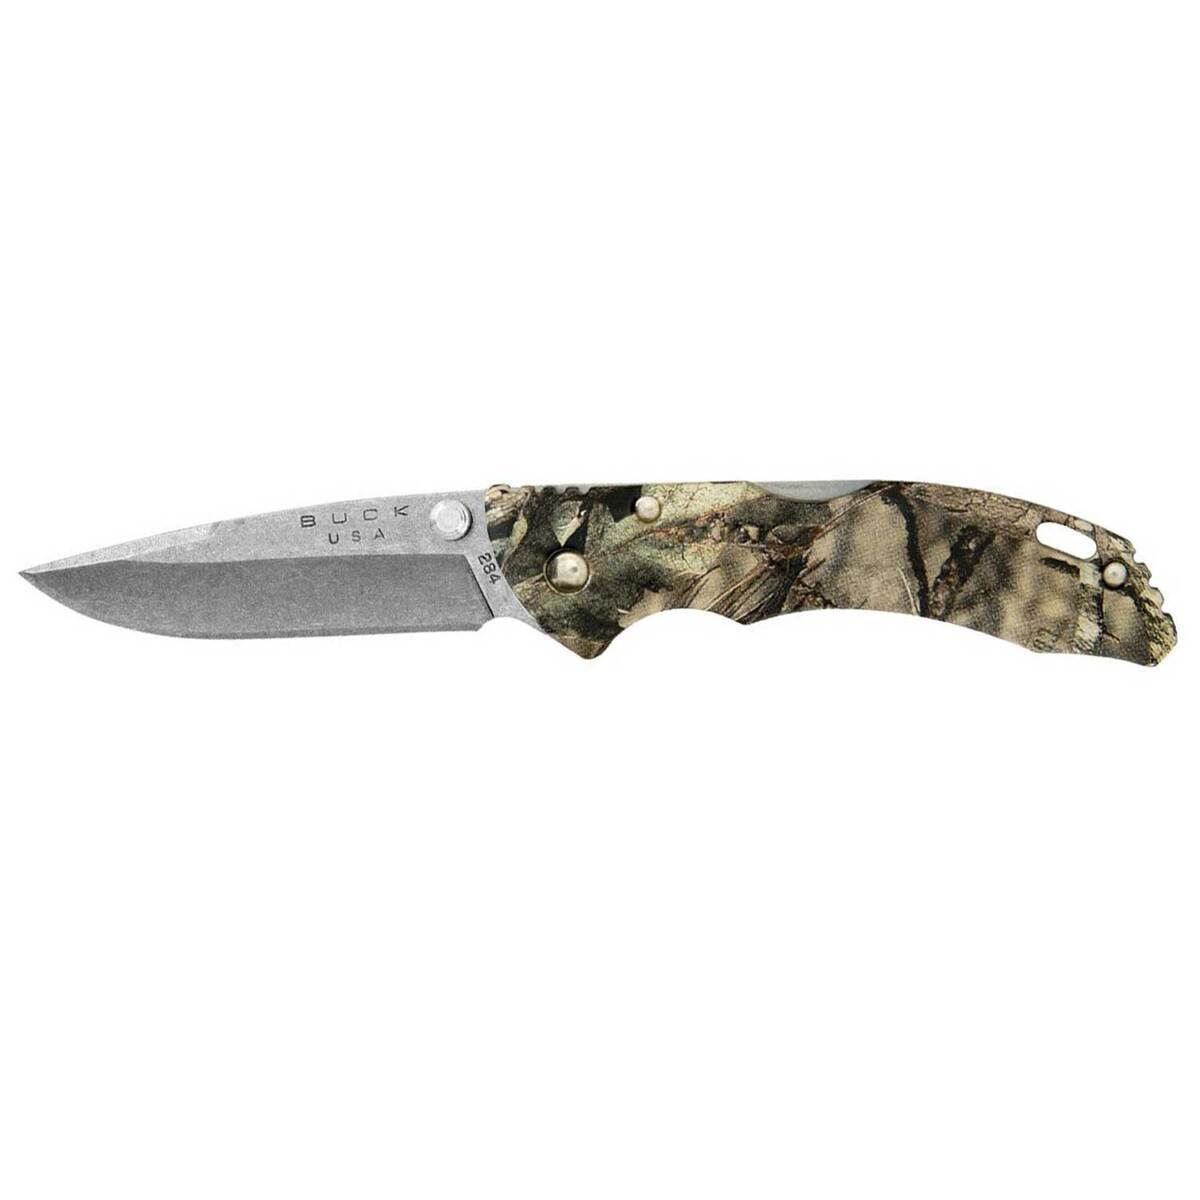 https://www.knives.com/medias/buck-knives-284-bantam-bbw-275-inch-folding-knife-mossy-oak-country-camo-1707515-1.jpg?context=bWFzdGVyfGltYWdlc3w0NDkxMnxpbWFnZS9qcGVnfGFHUm1MMmczTmk4eE1EQTBOVGcxTkRBNE9USTBOaTh4TnpBM05URTFMVEZmWW1GelpTMWpiMjUyWlhKemFXOXVSbTl5YldGMFh6RXlNREF0WTI5dWRtVnljMmx2YmtadmNtMWhkQXw3NjE0YTIyZWYyMGE3NTBlMGRhYjY5YjcyMDZkZTgxZTI2NmM1NTc4MDk0Yjg2YzM1NjhjMTBjY2VmNGM5ZDQ3